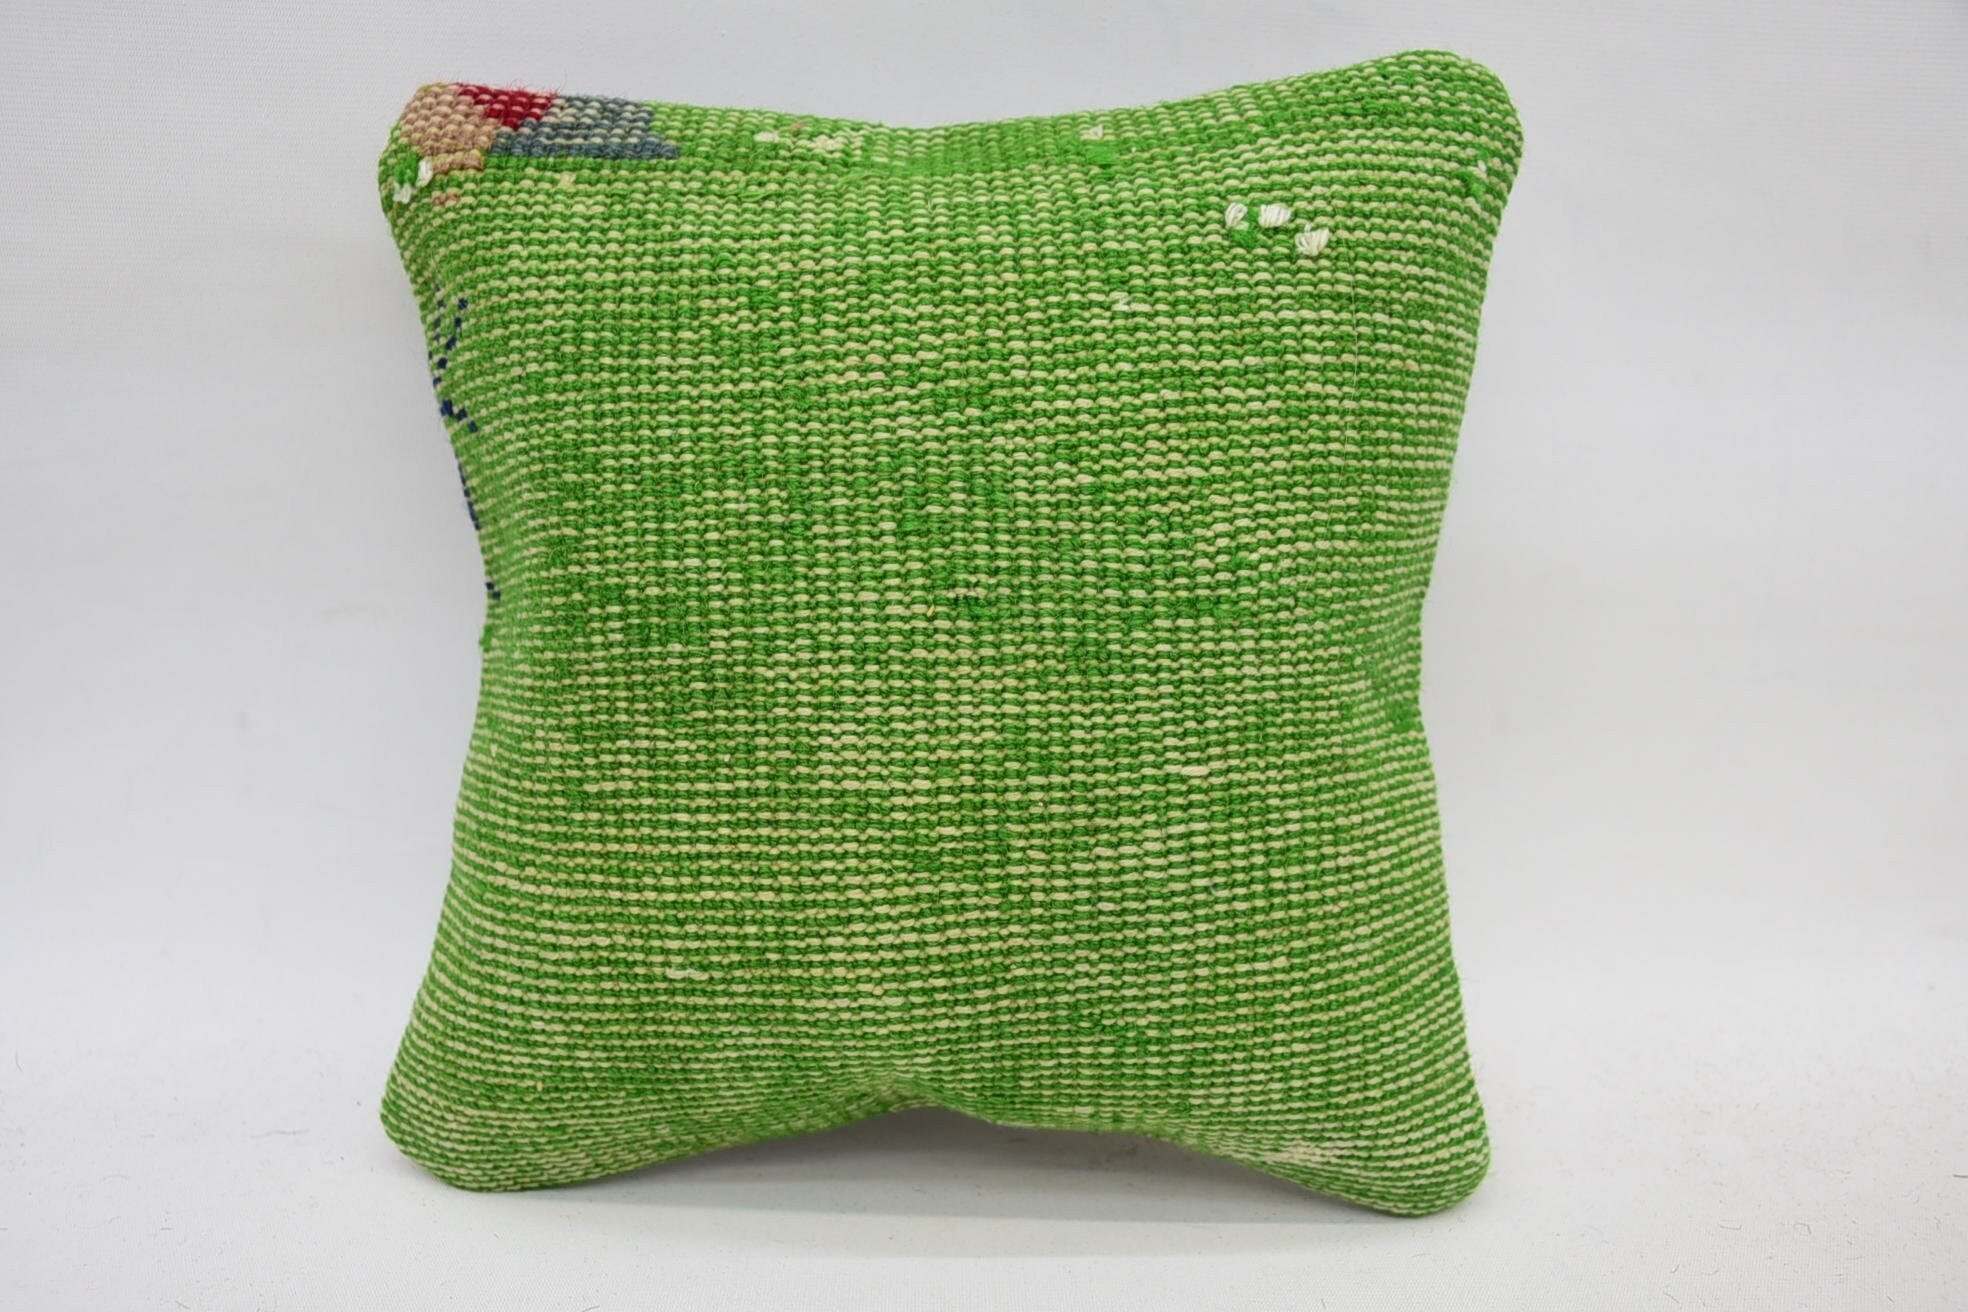 Vintage Kilim Pillow, Throw Kilim Pillow, 12"x12" Green Pillow, Sofa Cushion Case, Vintage Kilim Throw Pillow, Handwoven Cushion Cover